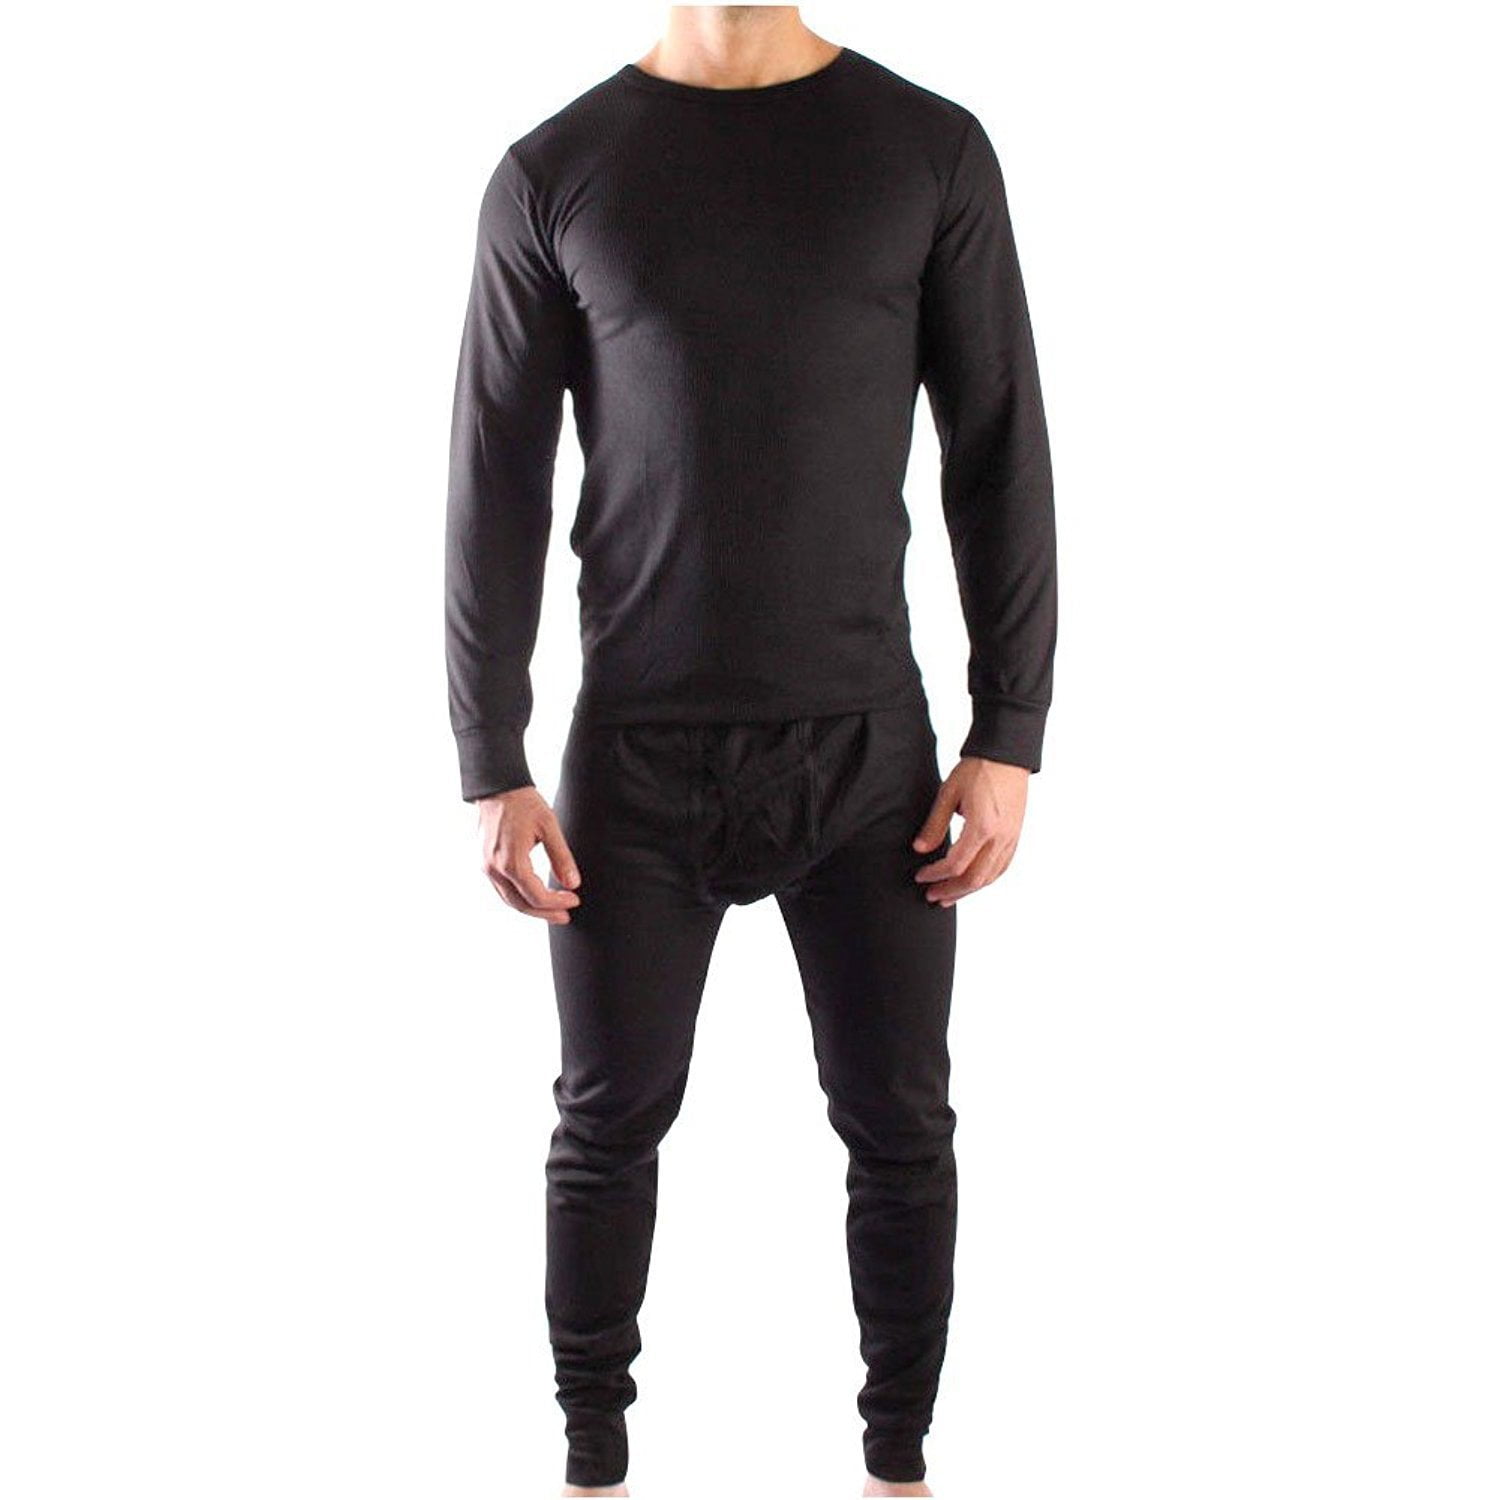 Men's Thermal Long Johns Underwear Long/Half Sleeve Shirt and bottoms Full Set 